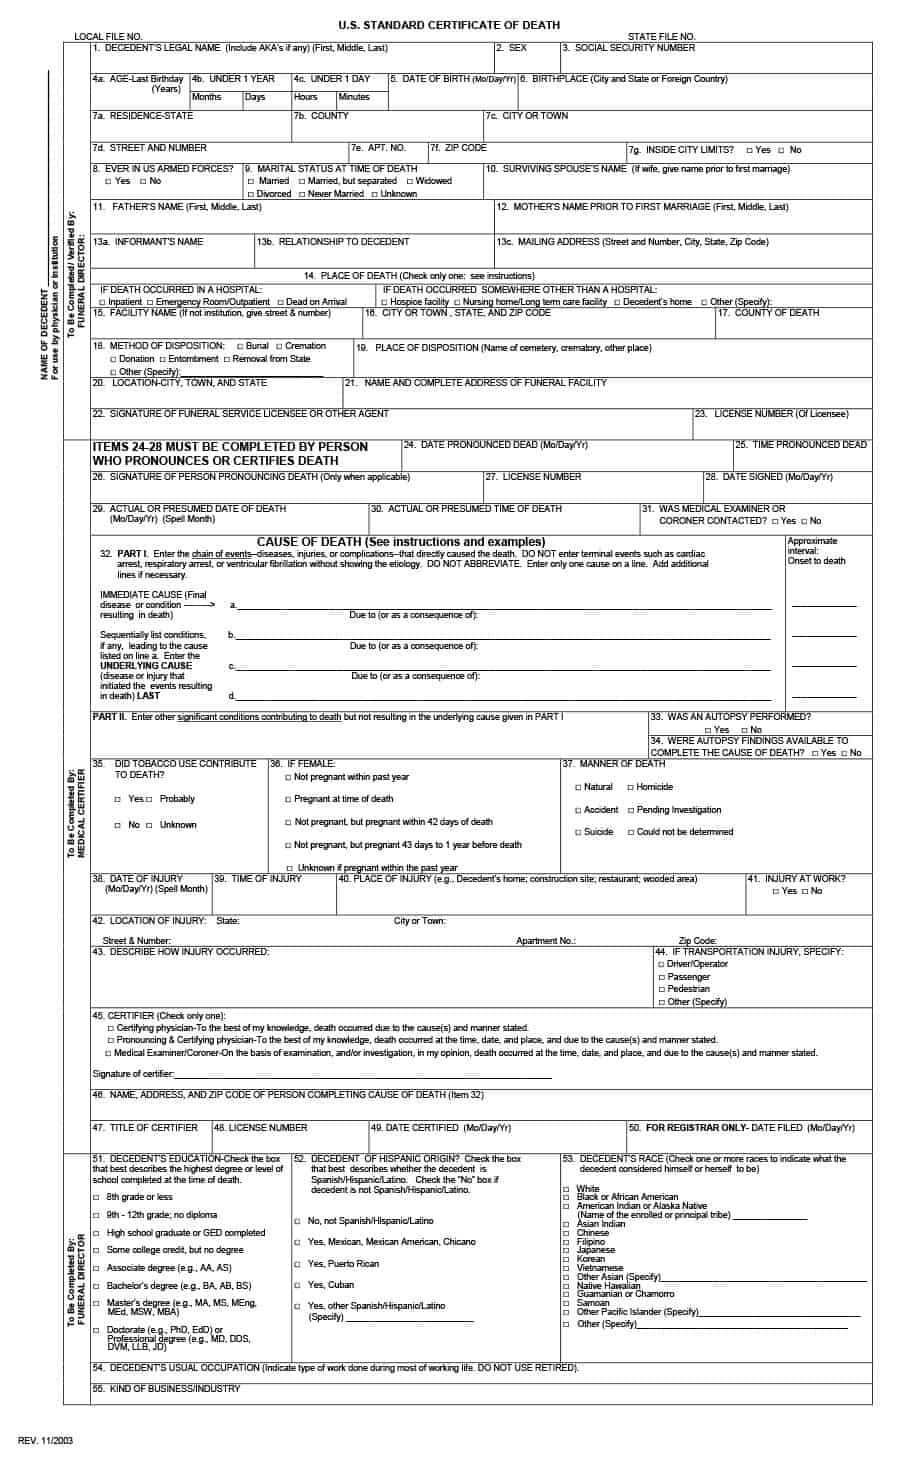 37 Blank Death Certificate Templates [100% Free] ᐅ Template Lab Regarding Fake Death Certificate Template